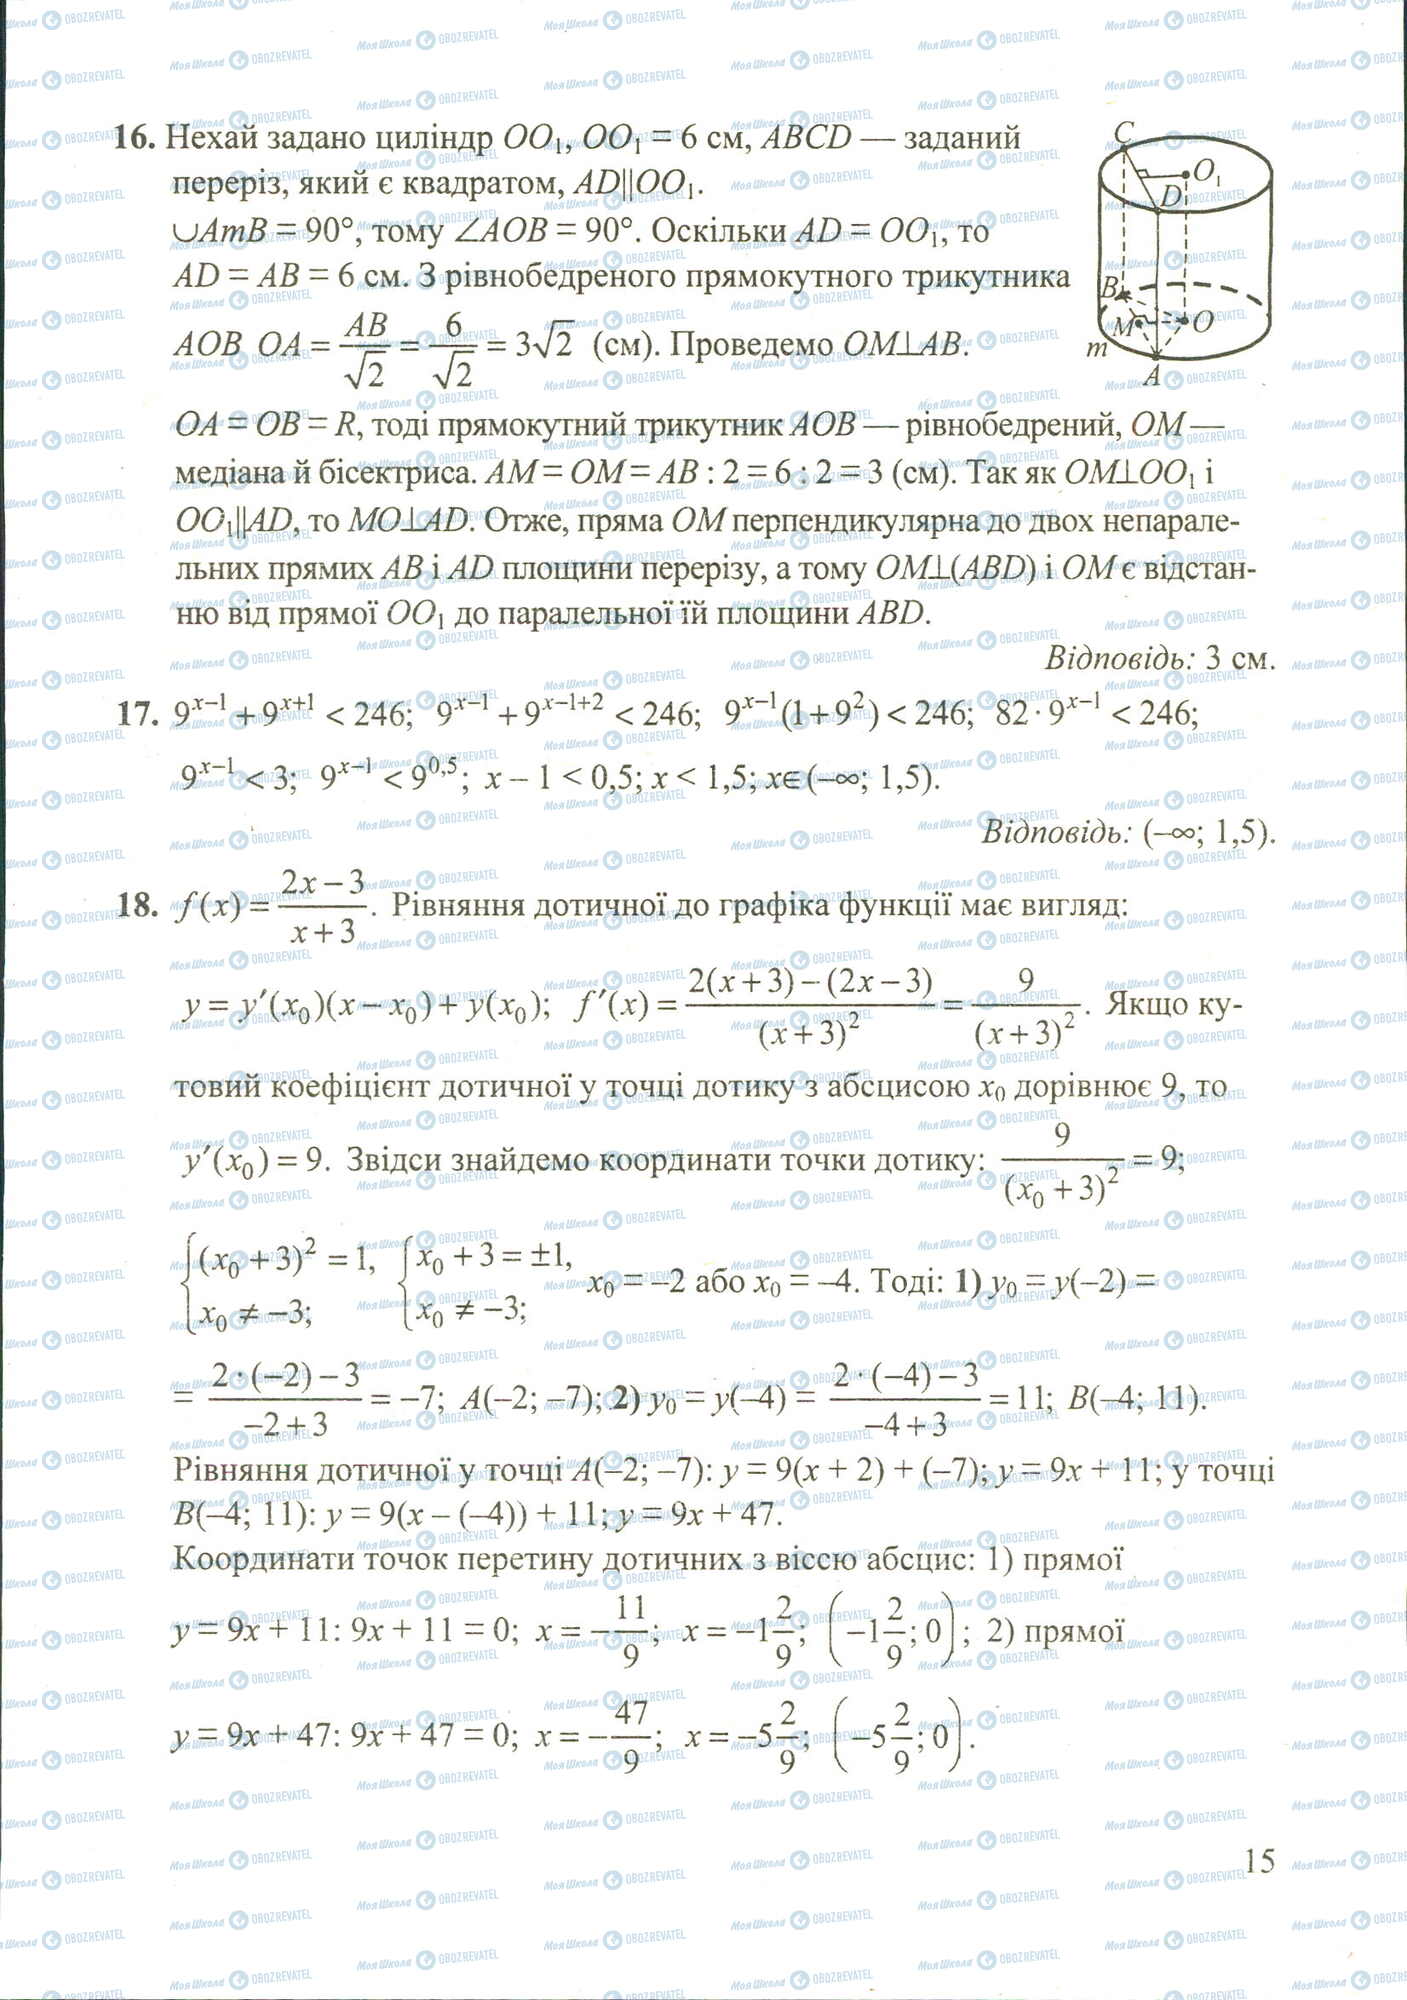 ДПА Математика 11 класс страница image0000007A